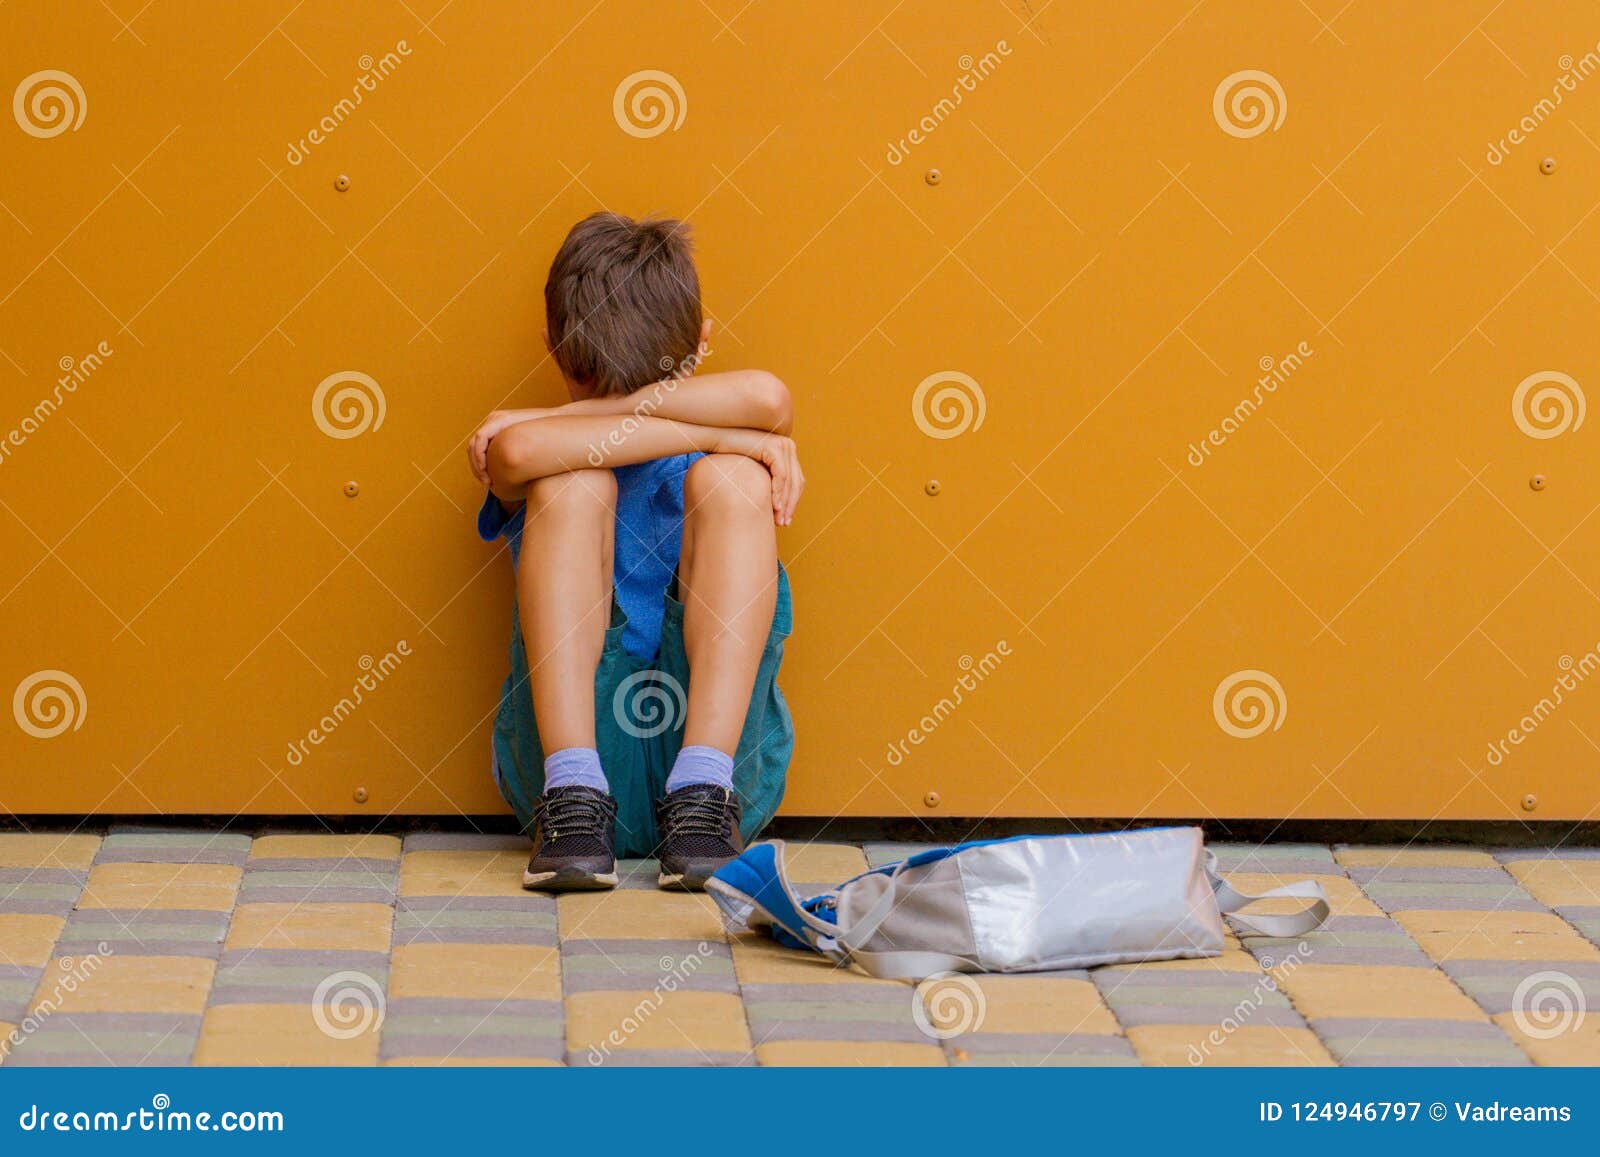 Sad Alone Boy Sitting Near Colorful Wall Outdoors Stock Image ...